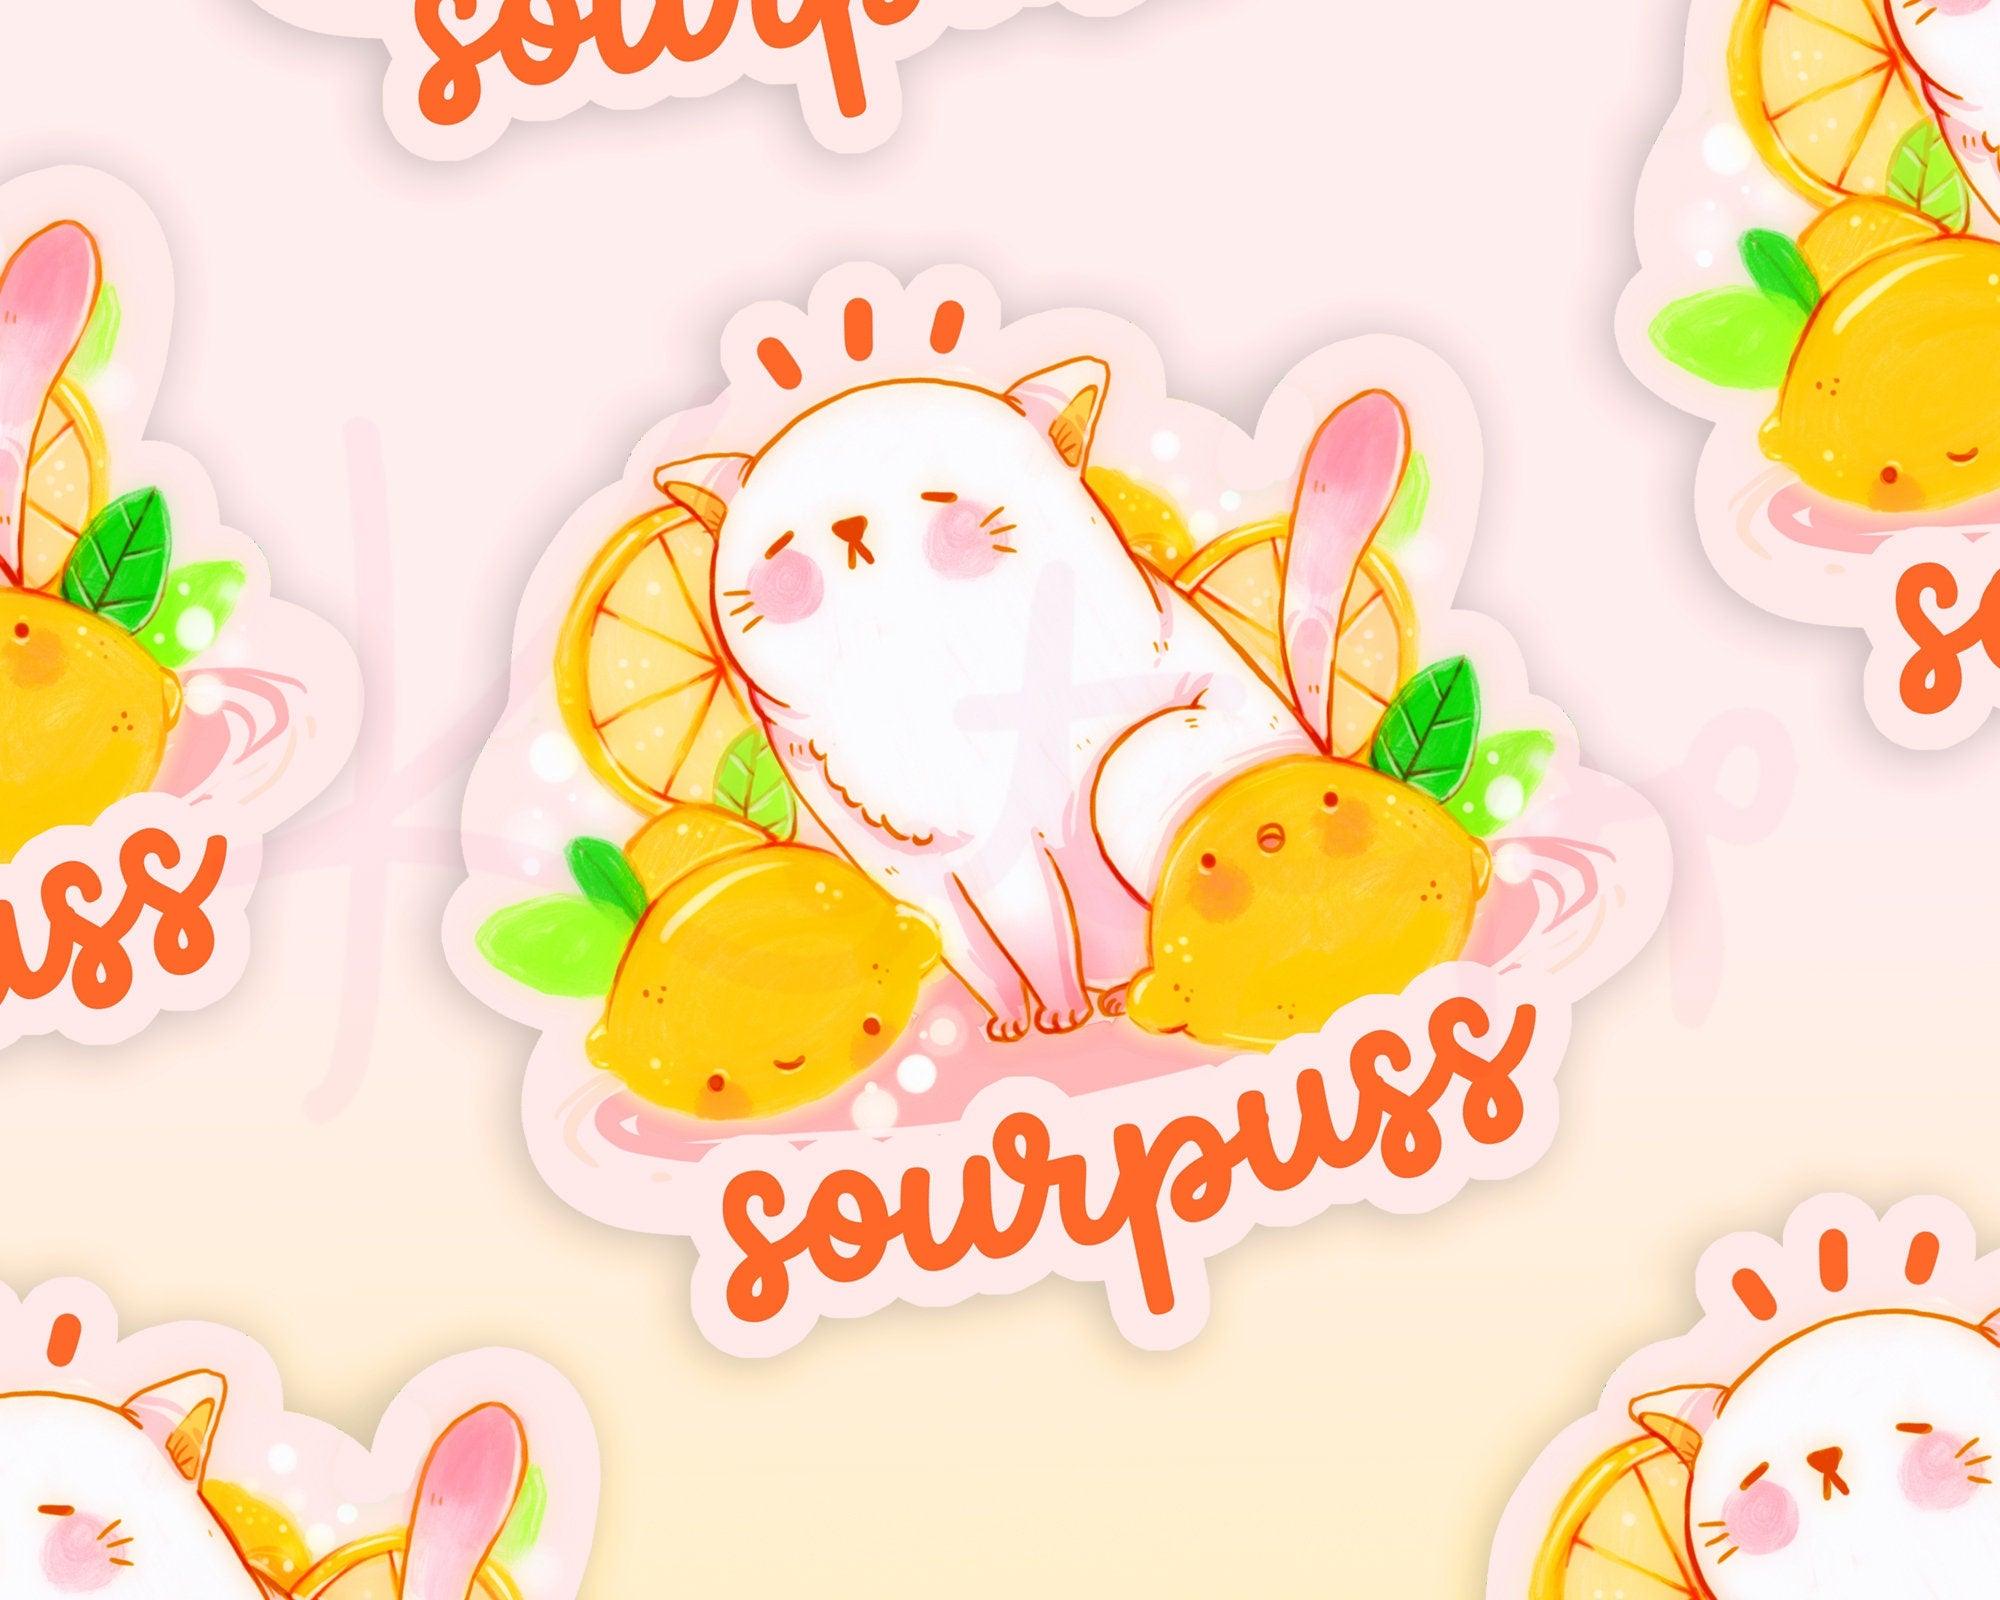 Citrus the Cat ~ Sourpuss! Funny Die Cut Sticker - Katnipp Illustrations